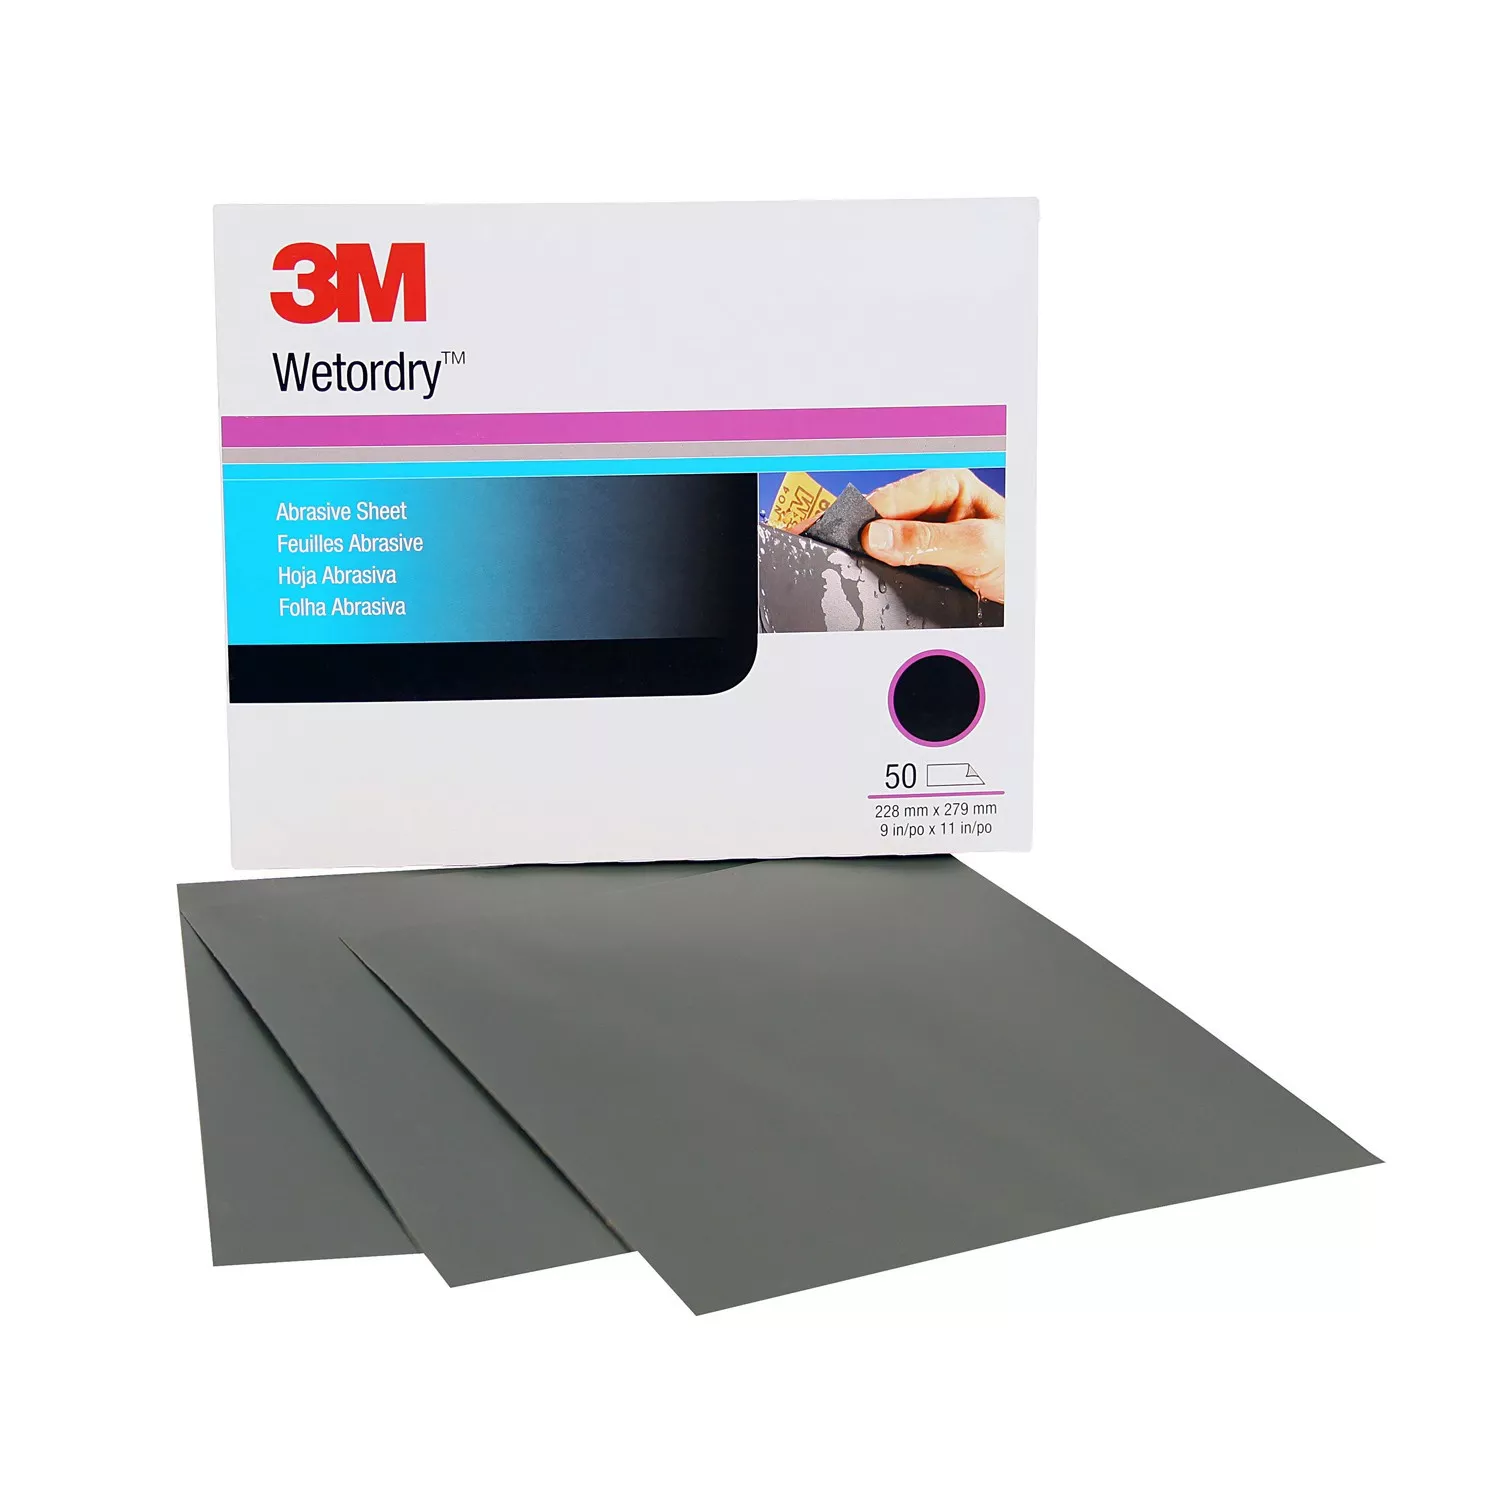 SKU 7000120114 | 3M™ Wetordry™ Abrasive Sheet